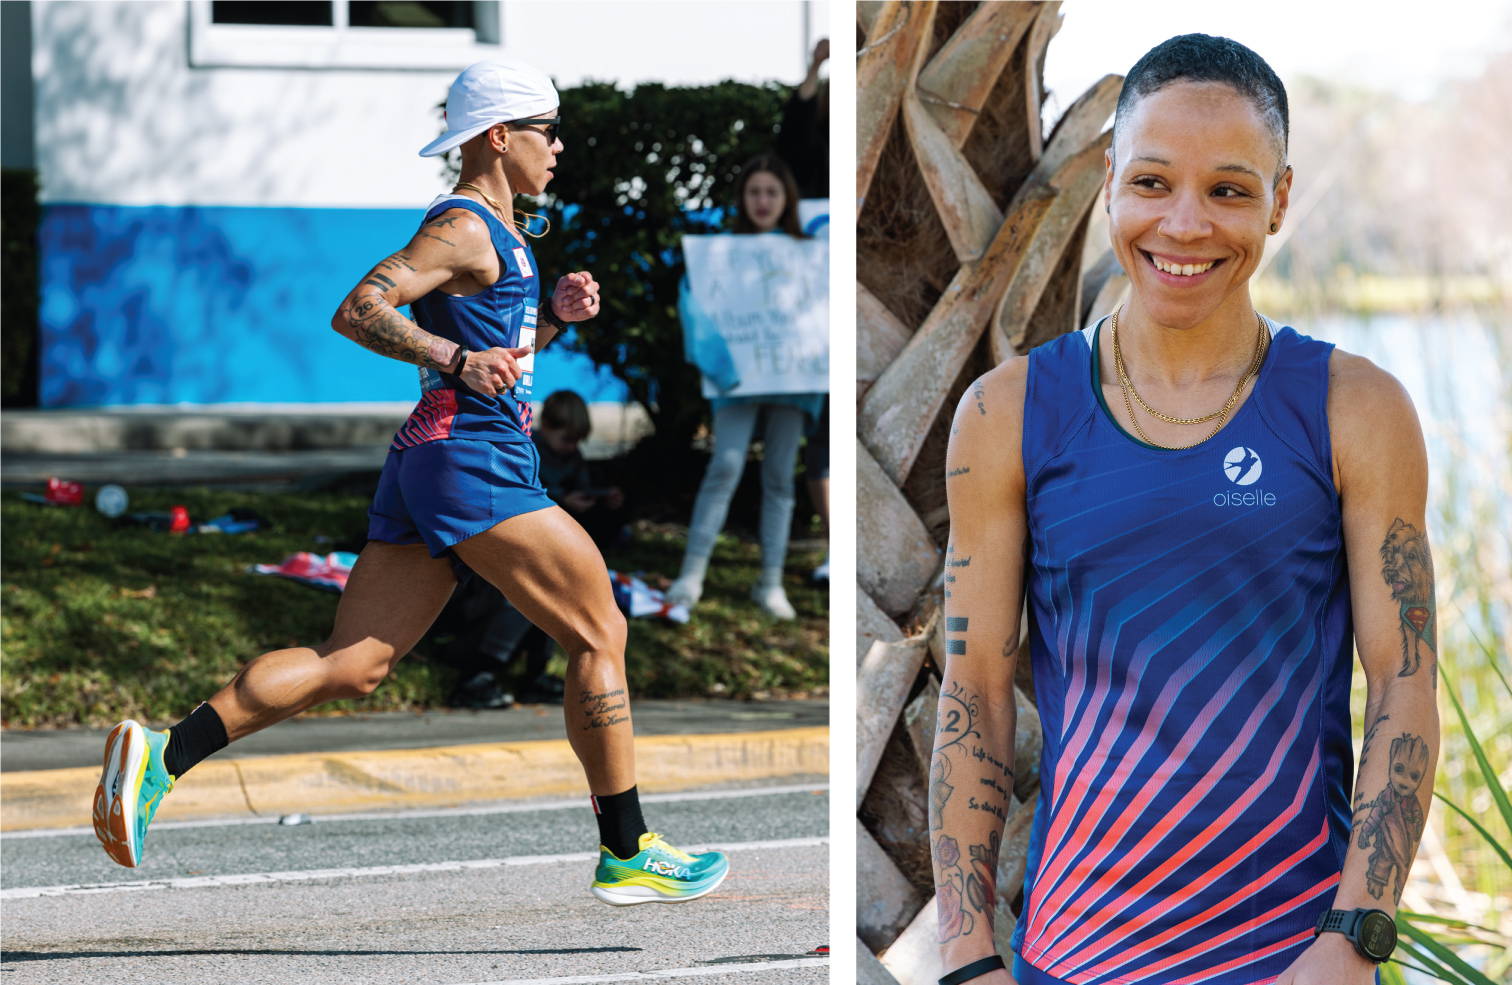 Left: Ari Hendrix-Roach racing during the Olympic Marathon Trials. Right: Portrait of Ari in her Oiselle uniform